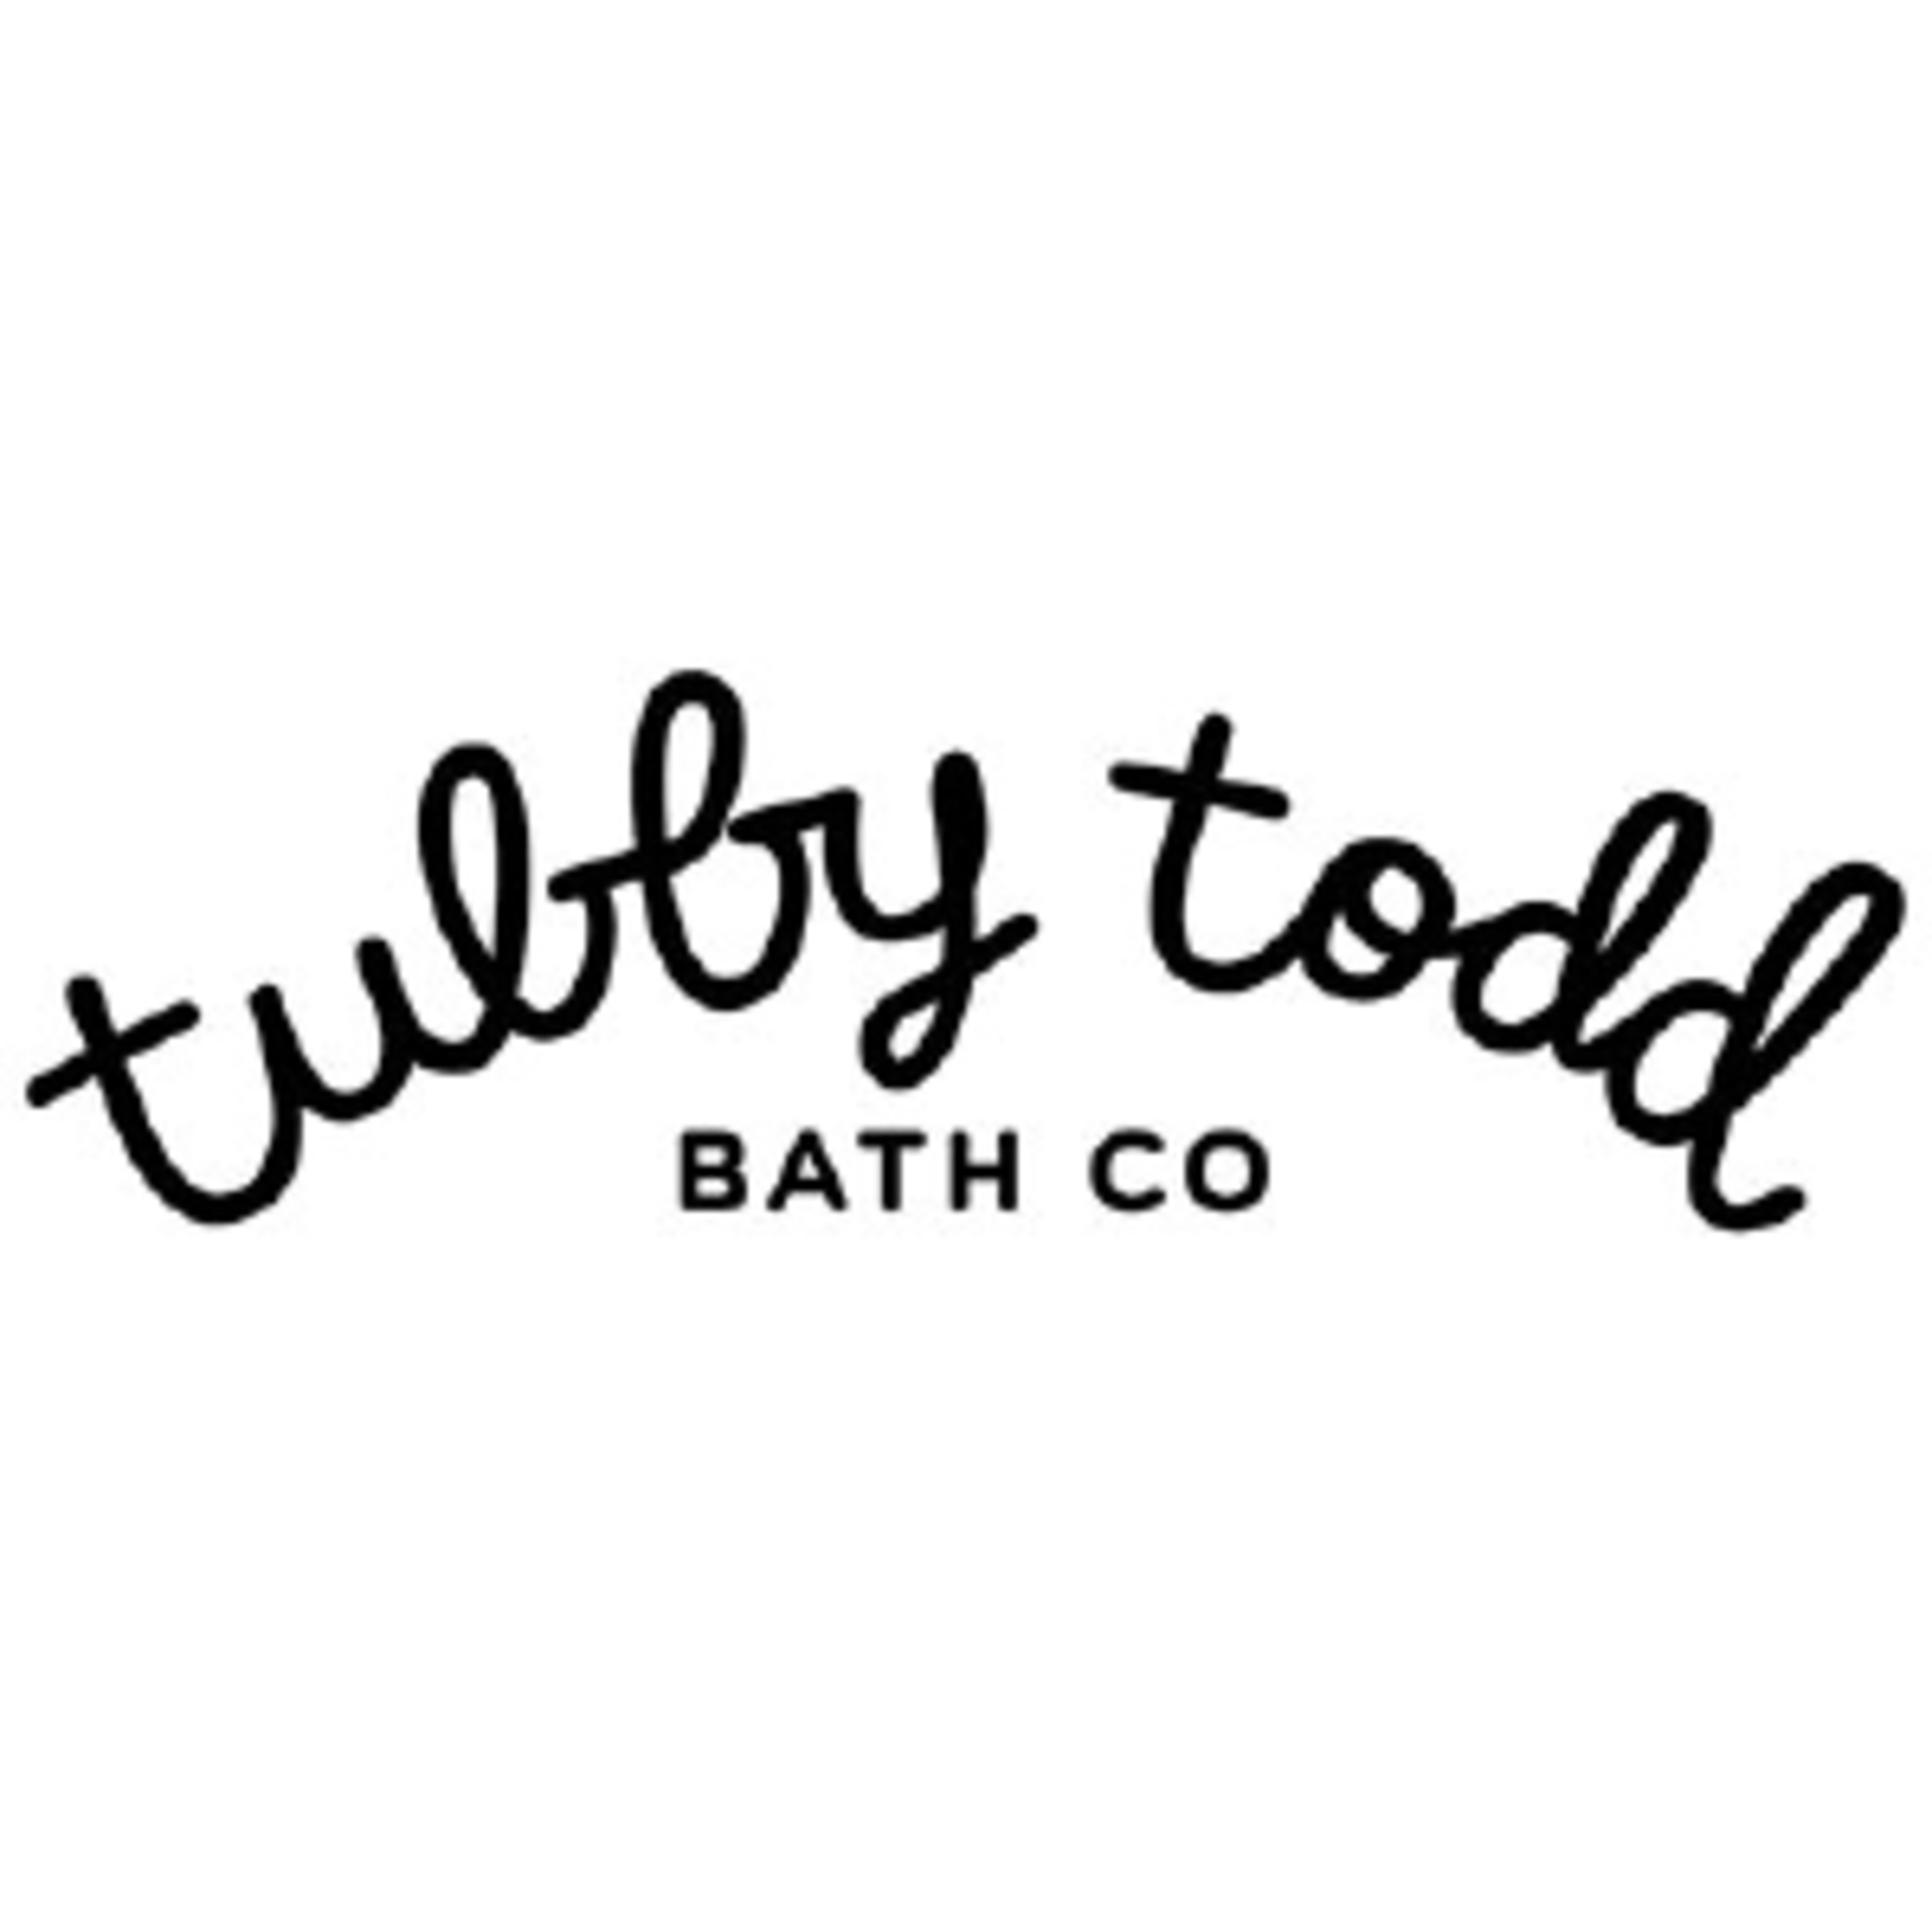 Tubby Todd Bath CoCode